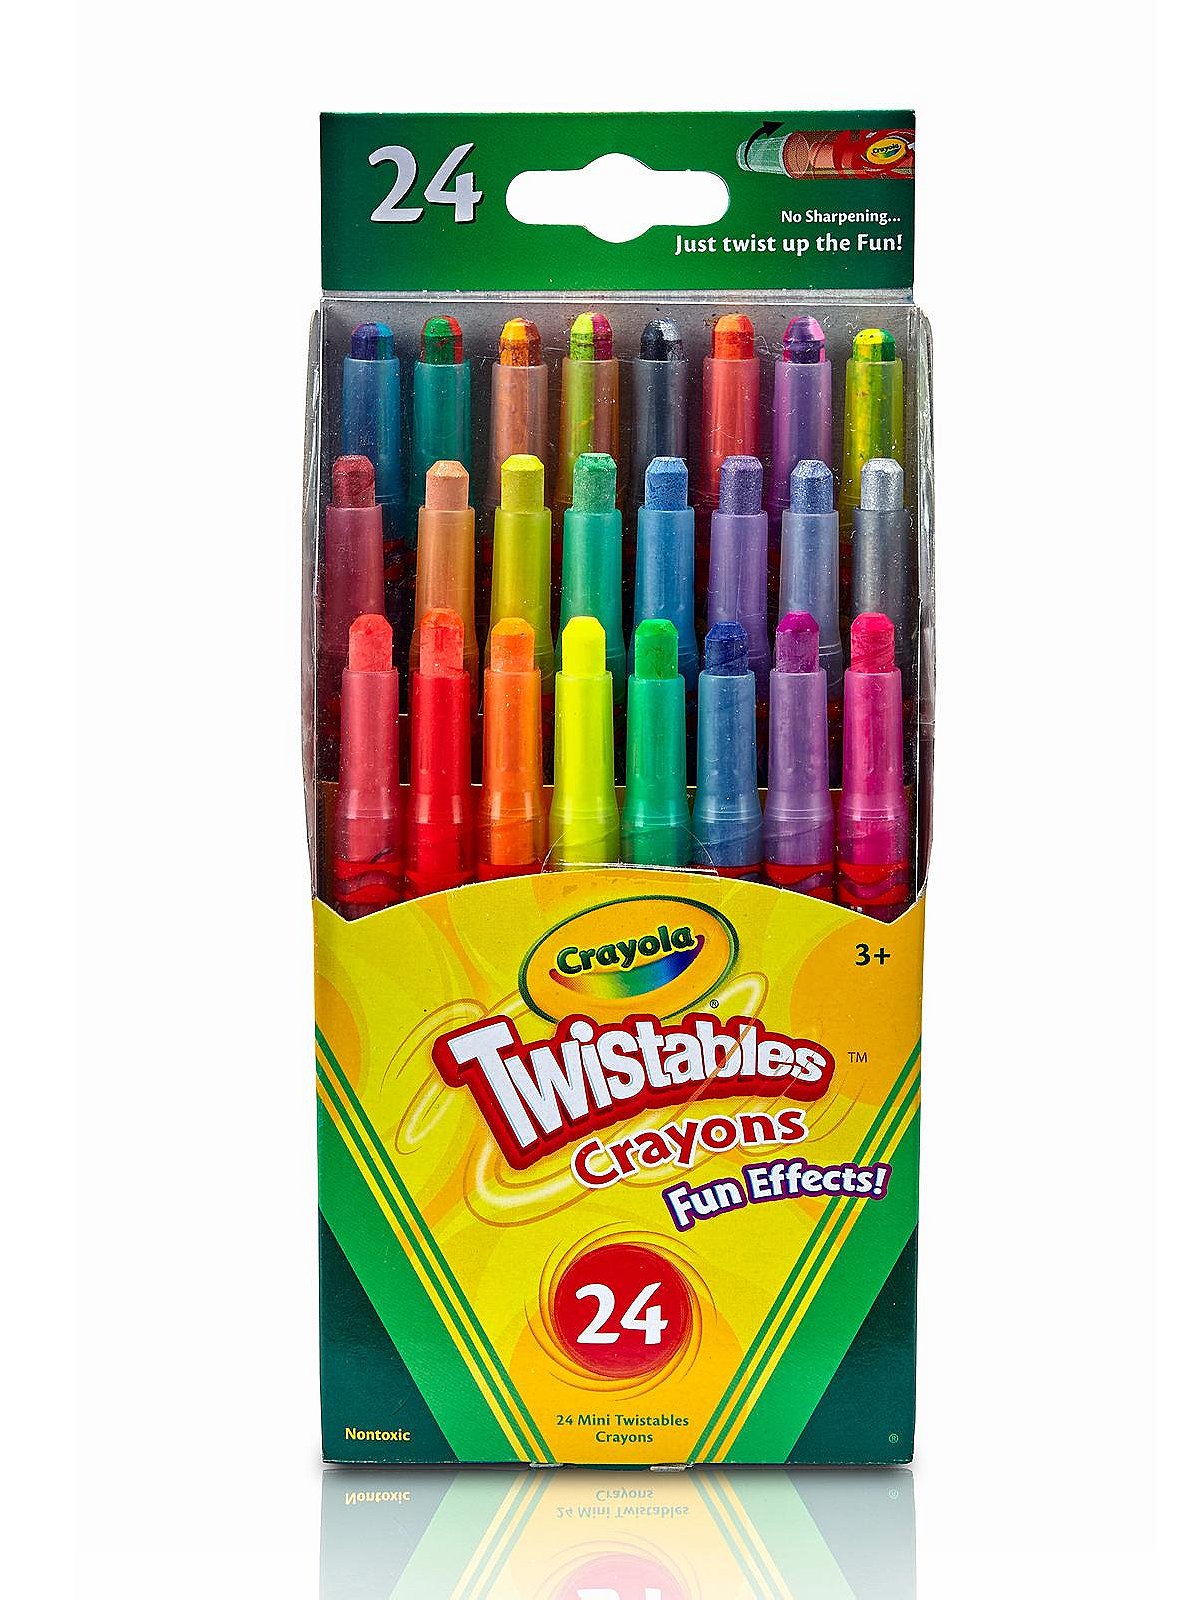 Colorations Regular Crayons - 8 Colors Set of 800 Item #CRRGS